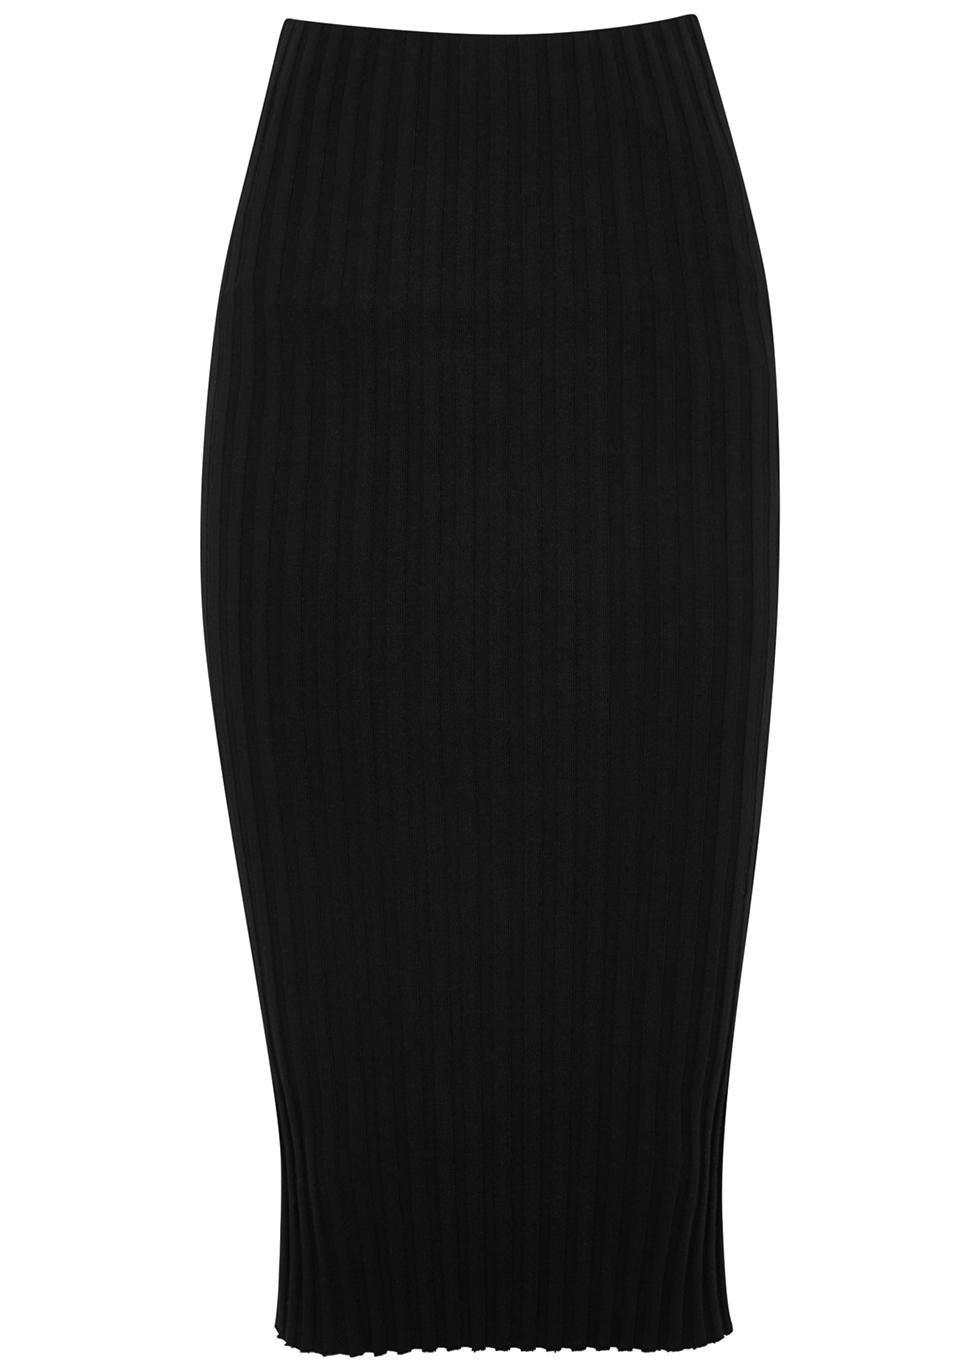 Capri black cut-out stretch-cotton midi skirt by COTTON CITIZEN